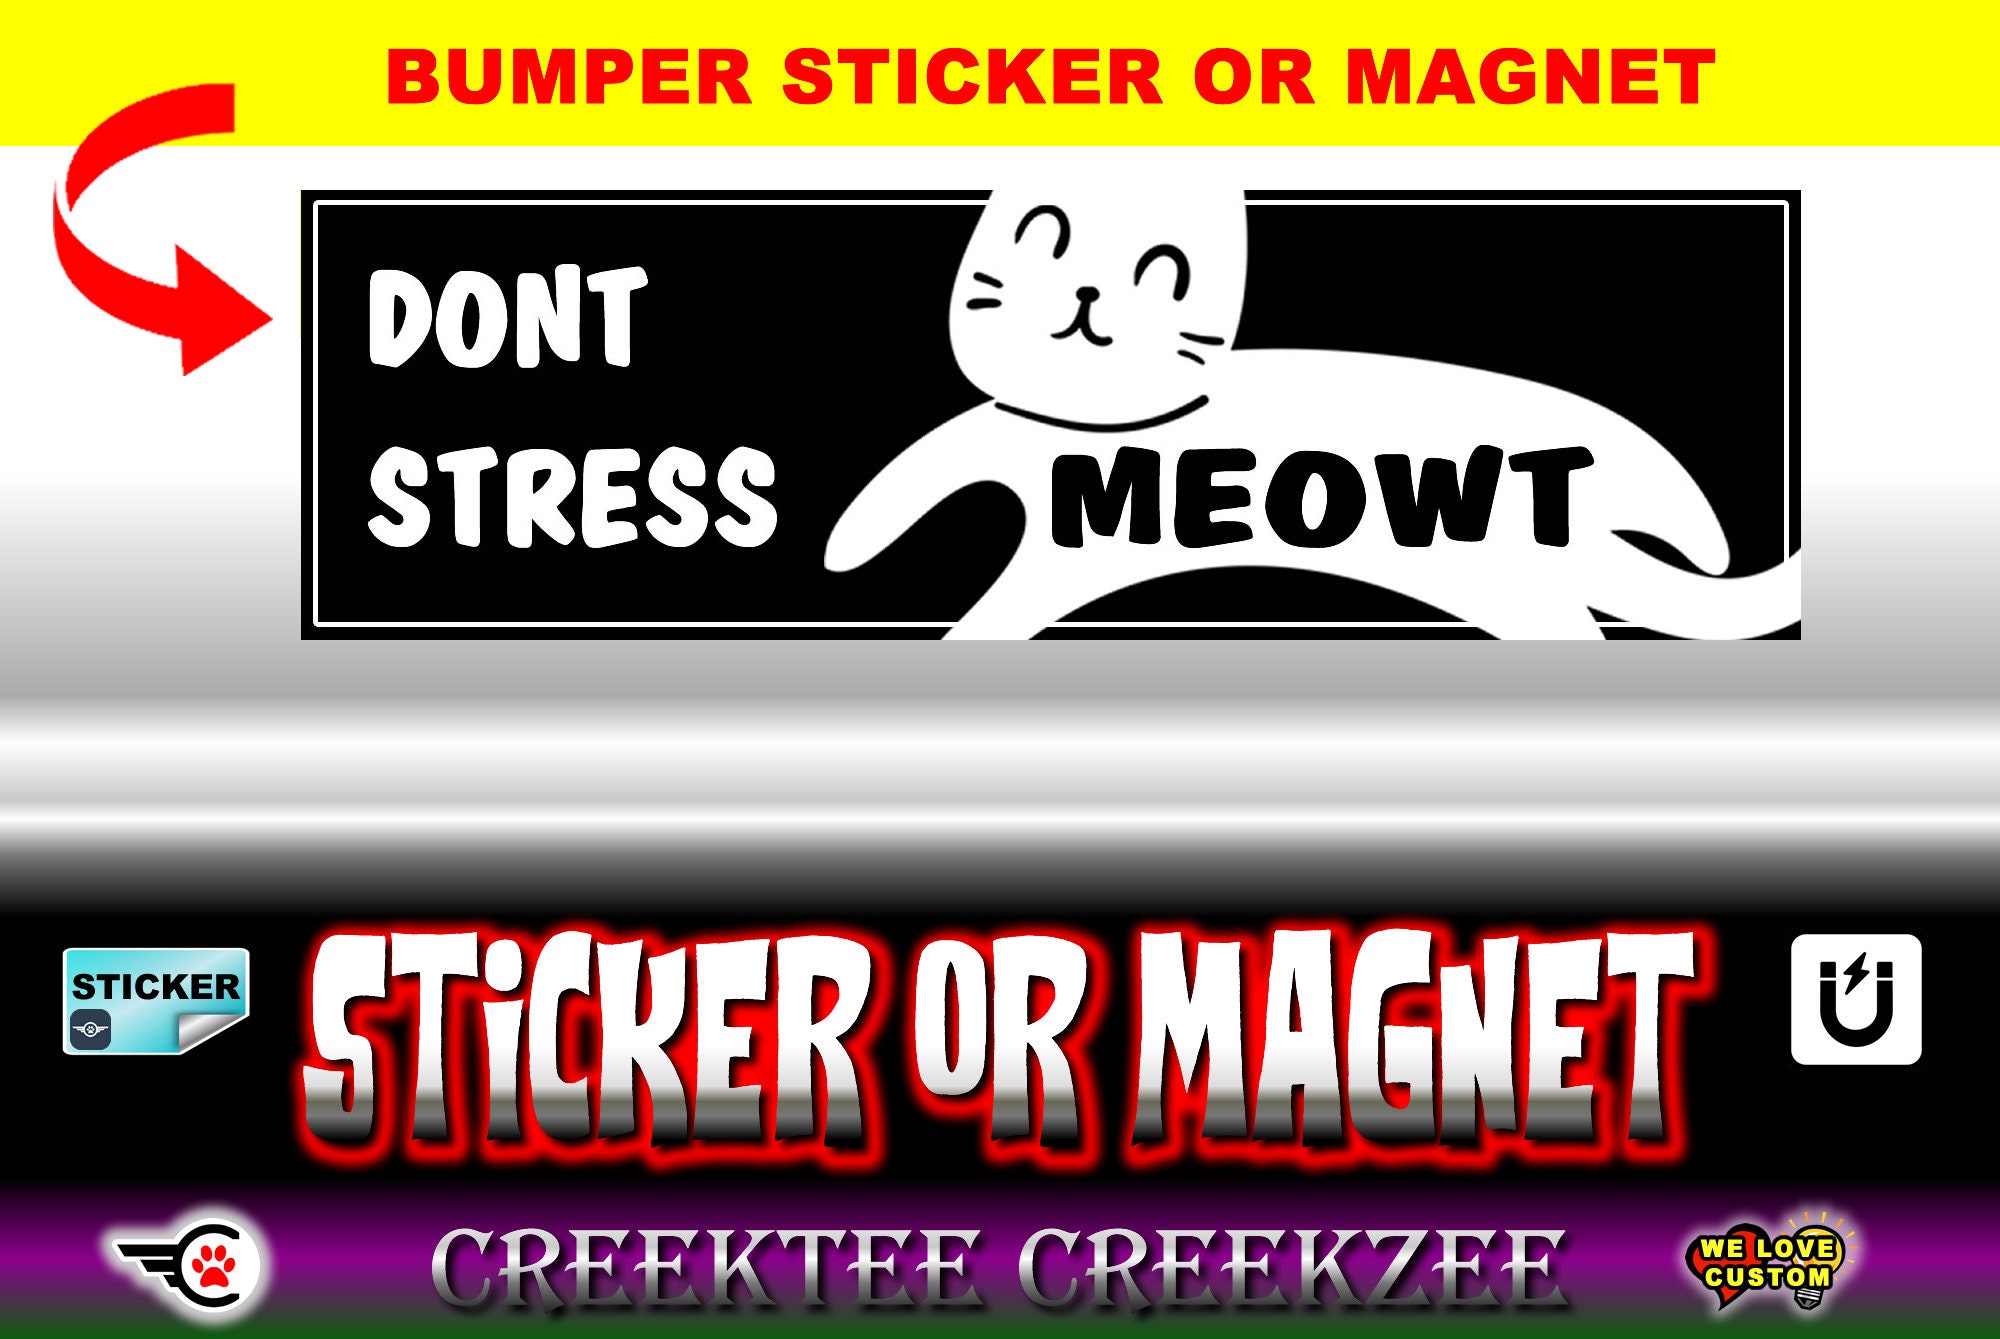 Don't Stress Meowt Bumper Sticker or Magnet sizes 4